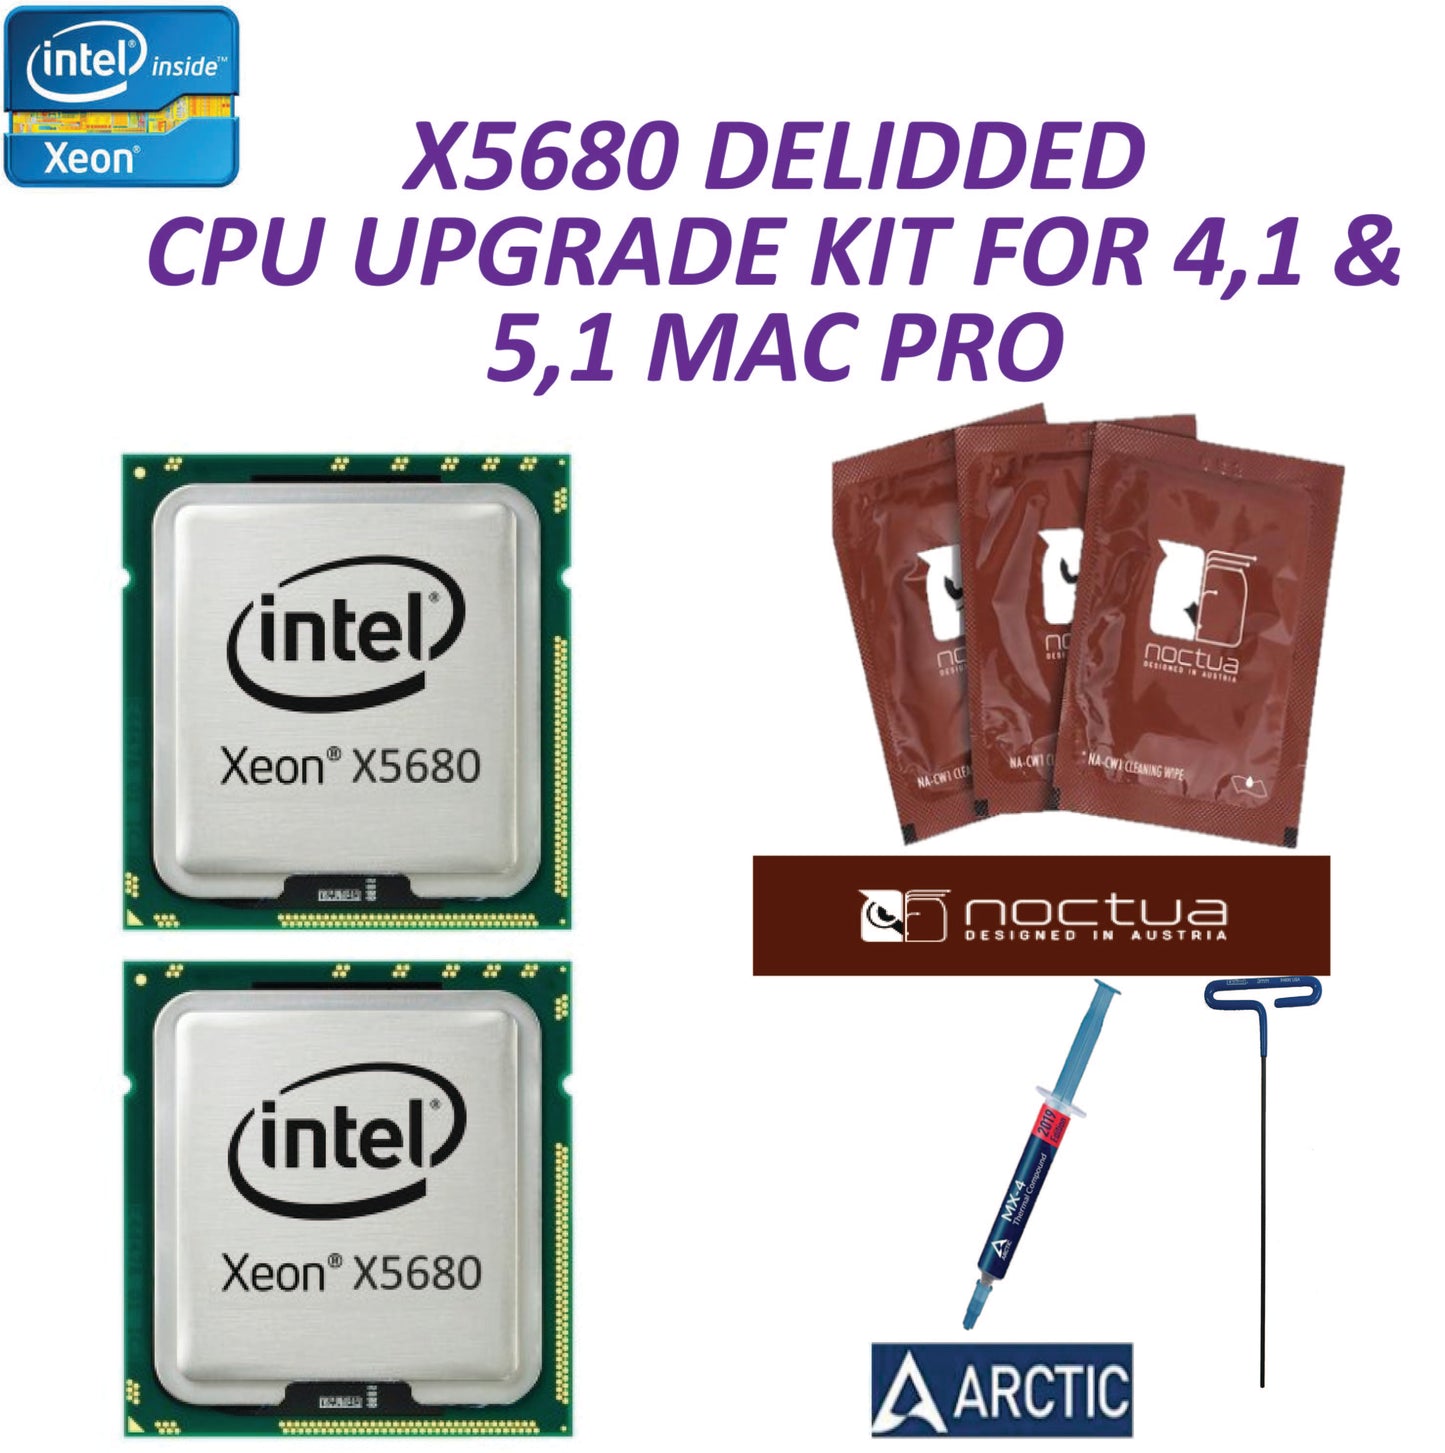 Mac Pro 4,1 5,1 x5680 Delidded CPU Upgrade Kit